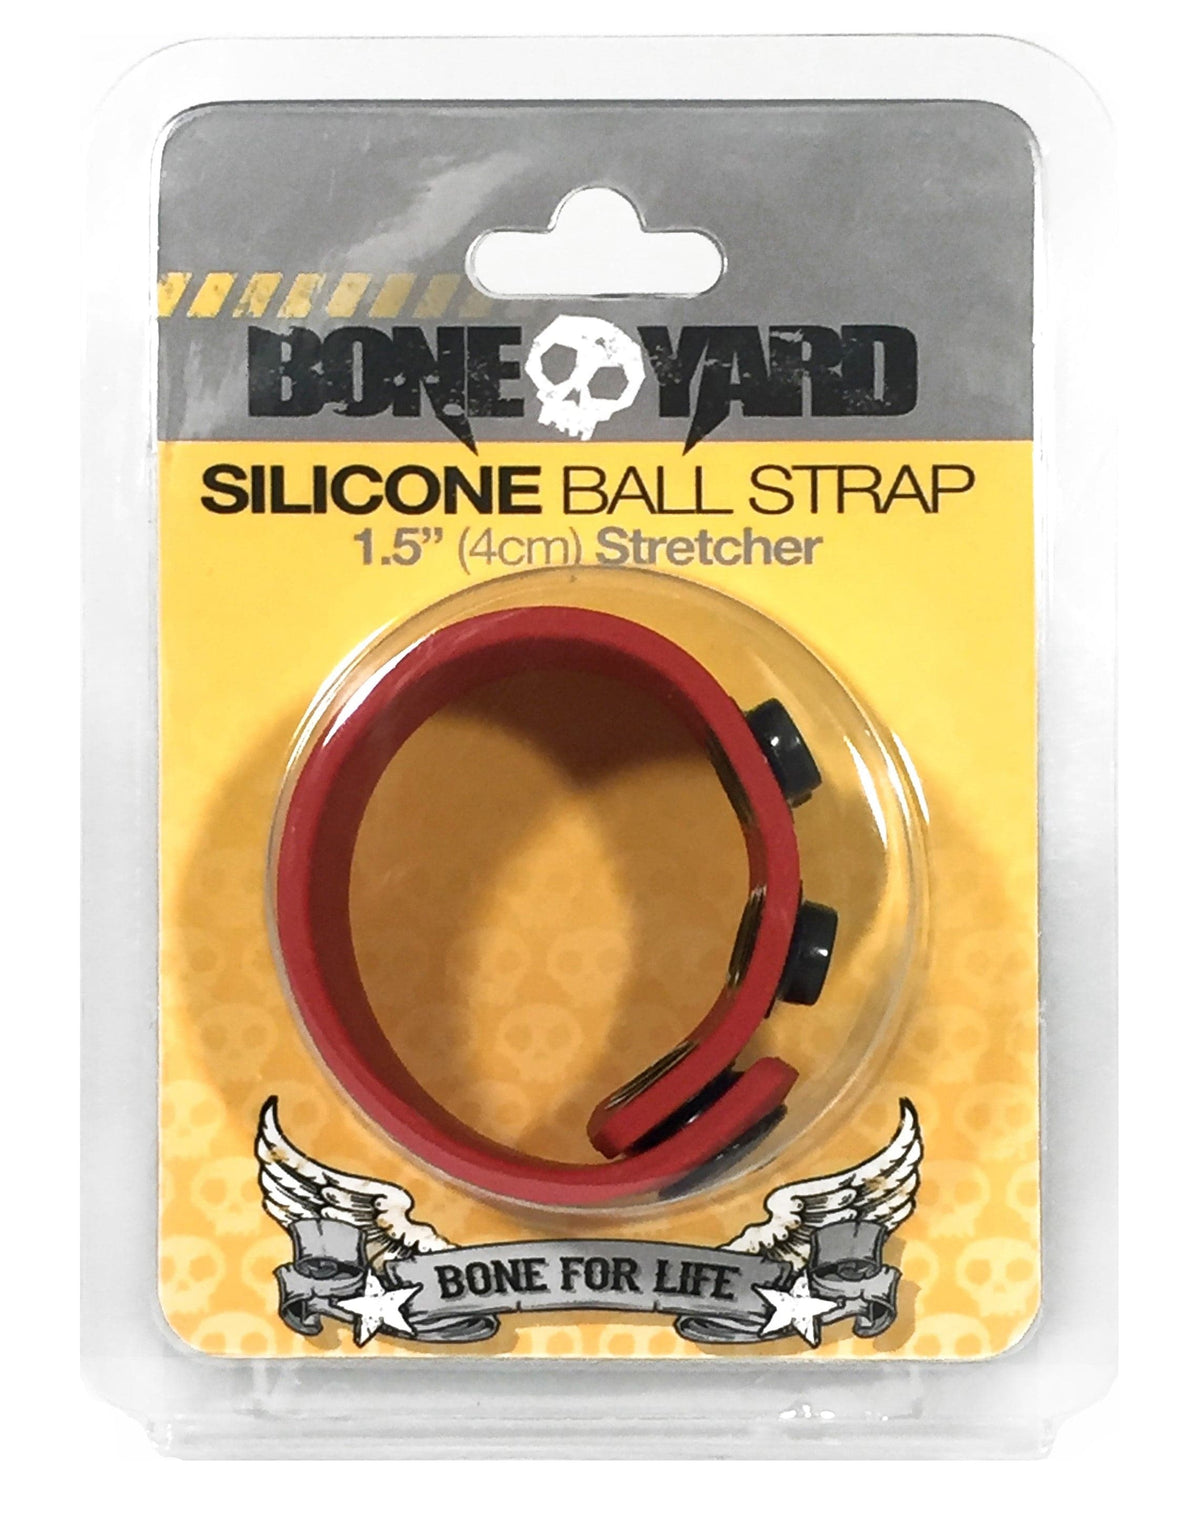 boneyard silicone ball strap 4cm stretcher red